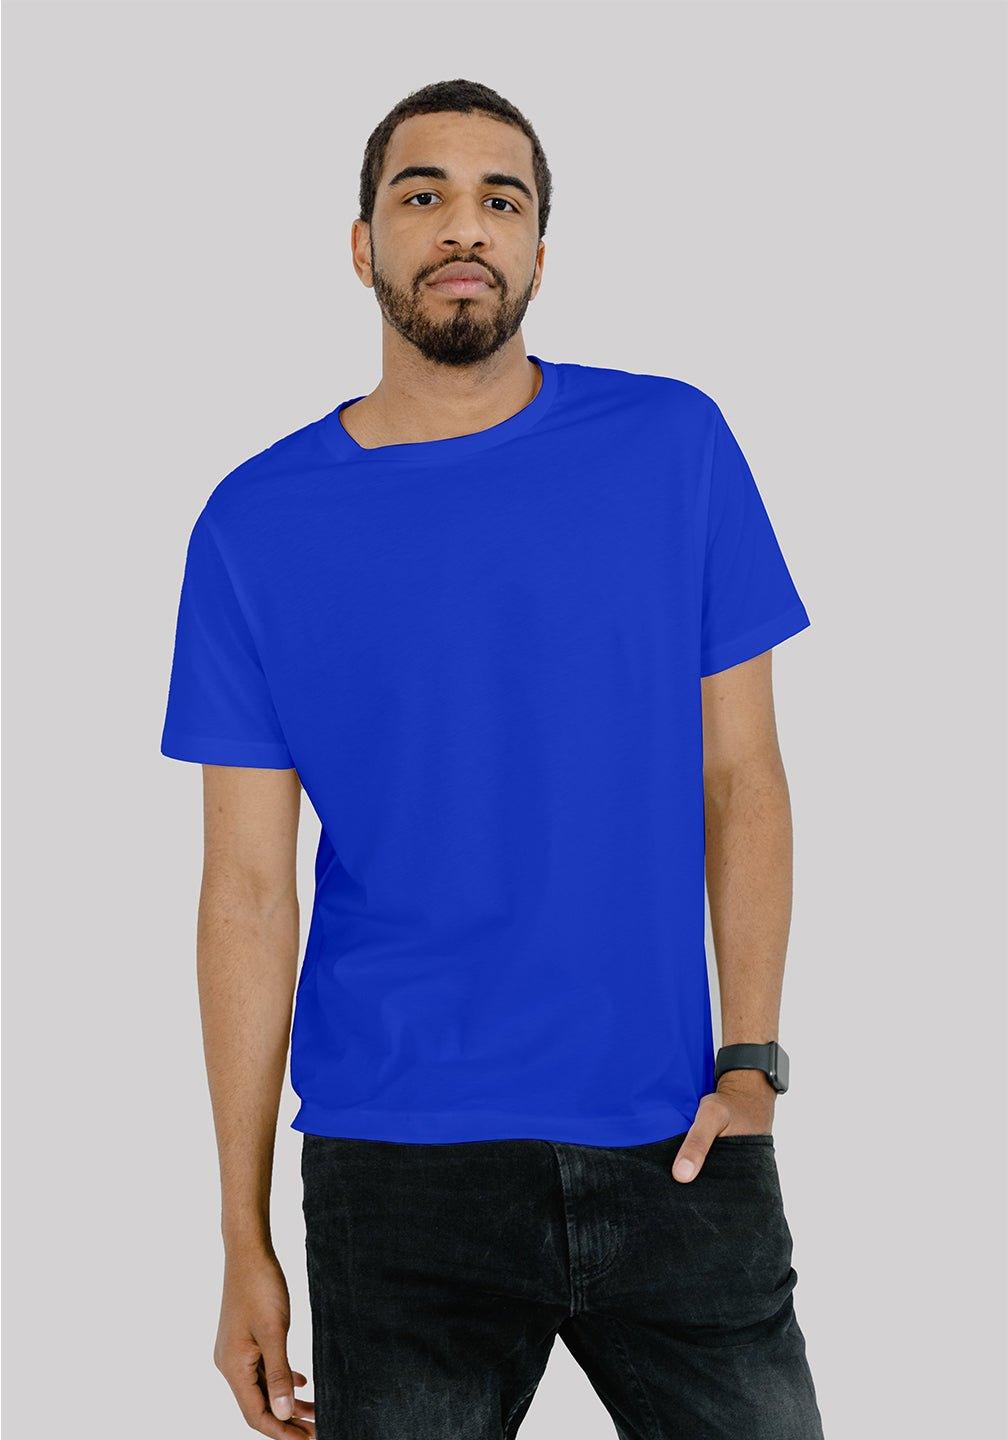 Solid Plain T Shirt Combo For Men In Navy Blue Colour Variant